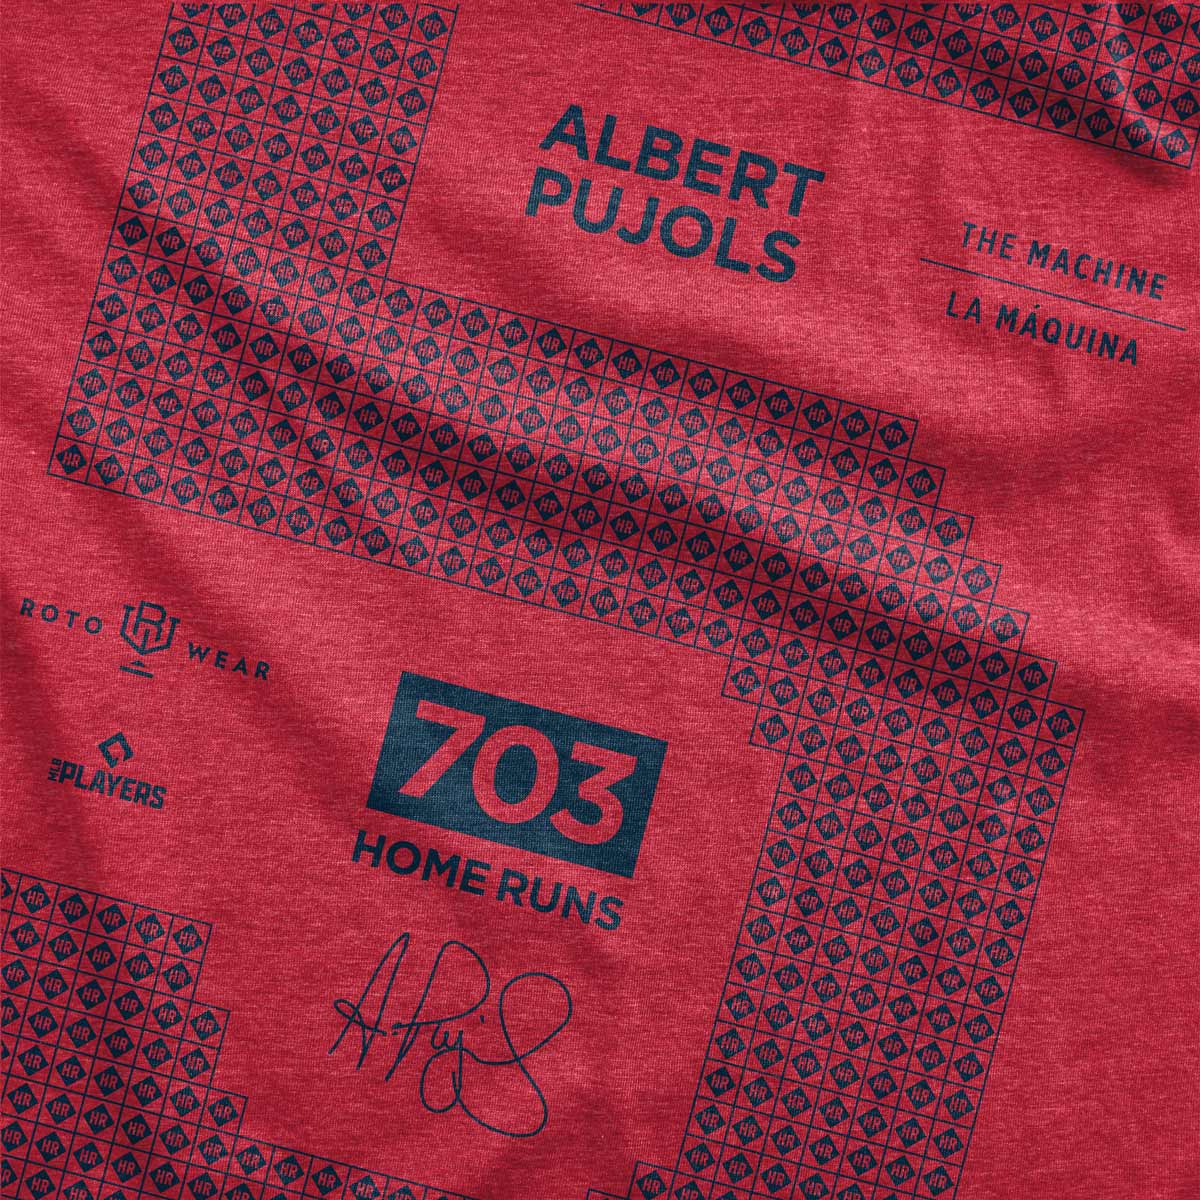 Albert Pujols Foundation 700th Home Run Club Shirt